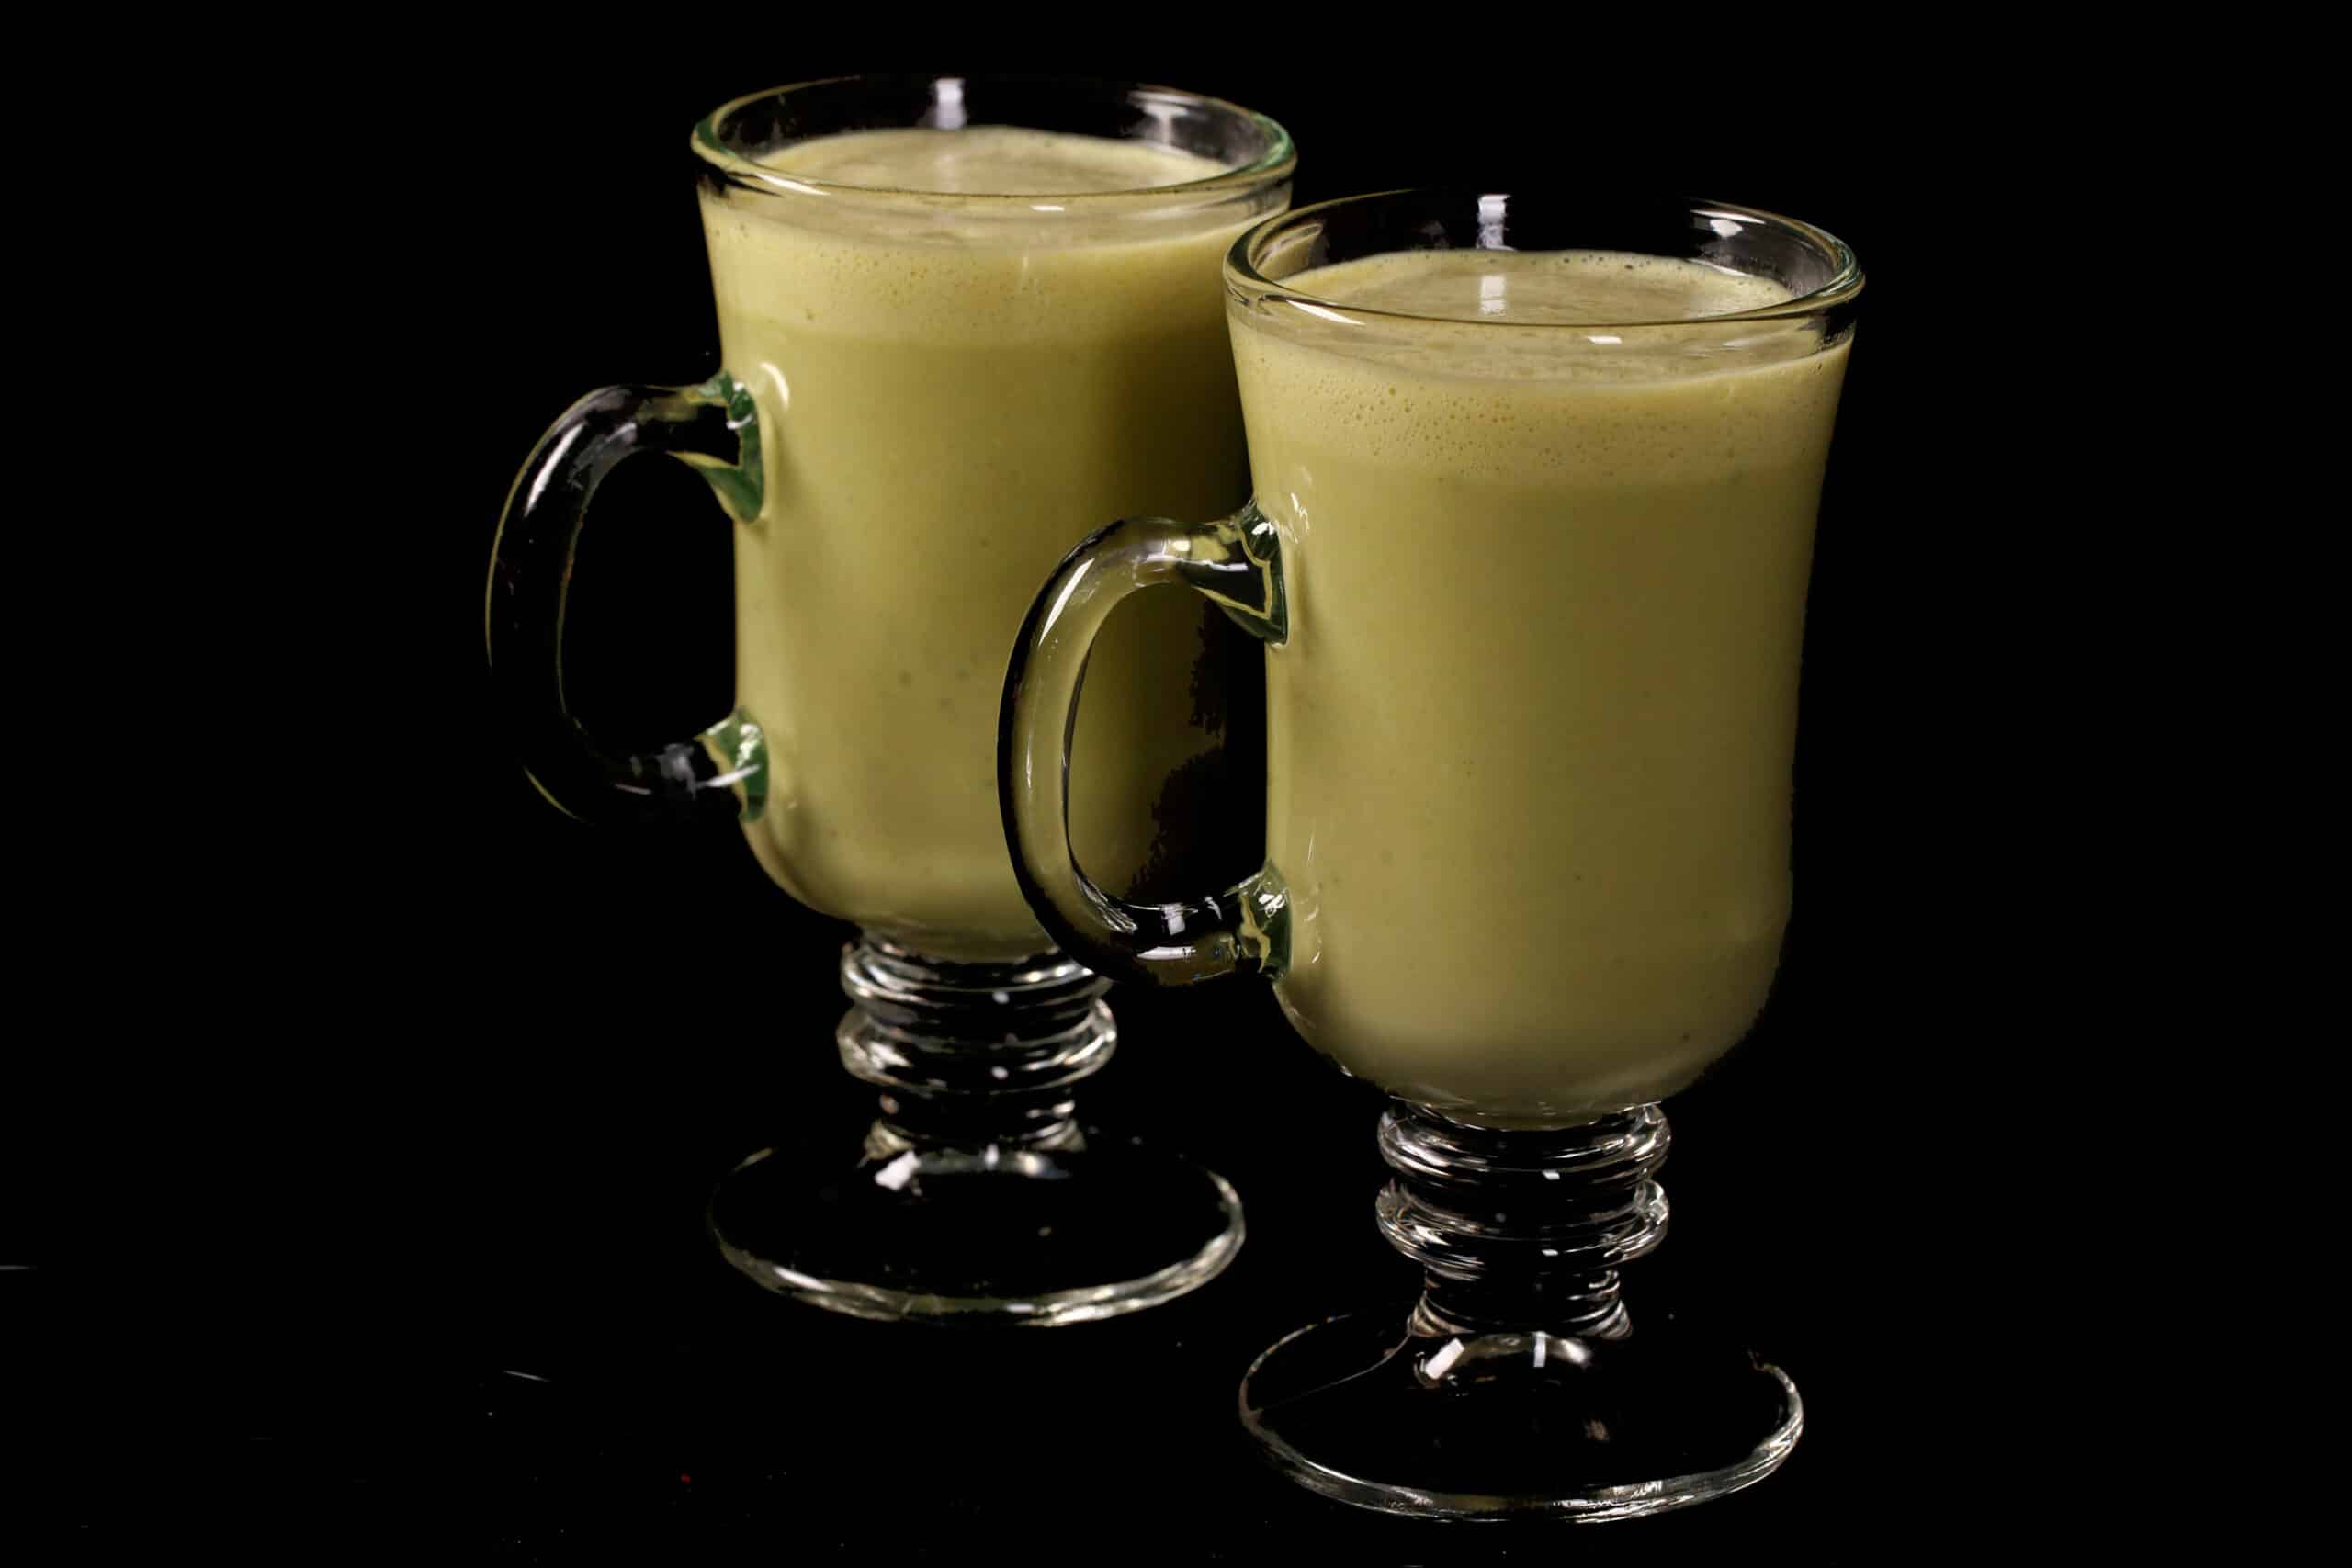 2 protein powder keto matcha lattes in glass mugs.